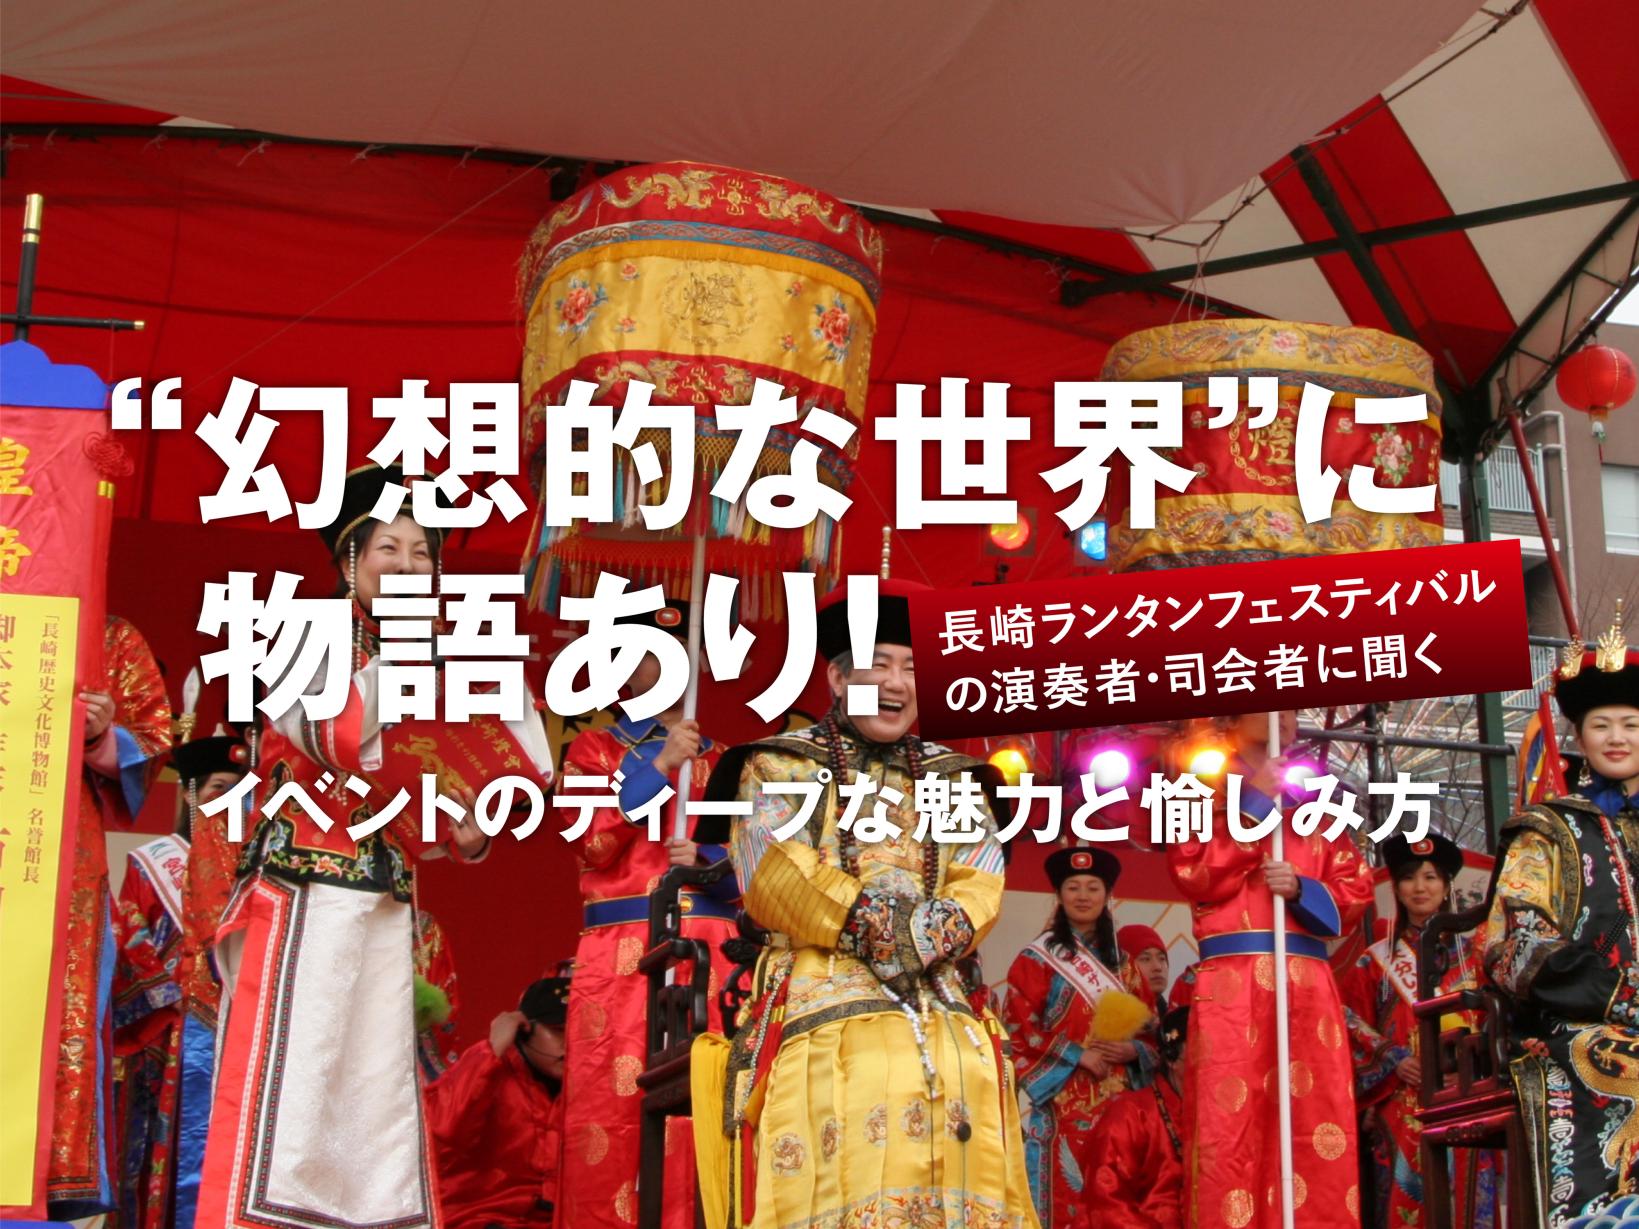 travel nagasakiホームページにて、「ランタンフェスティバル」新記事を公開中です-1